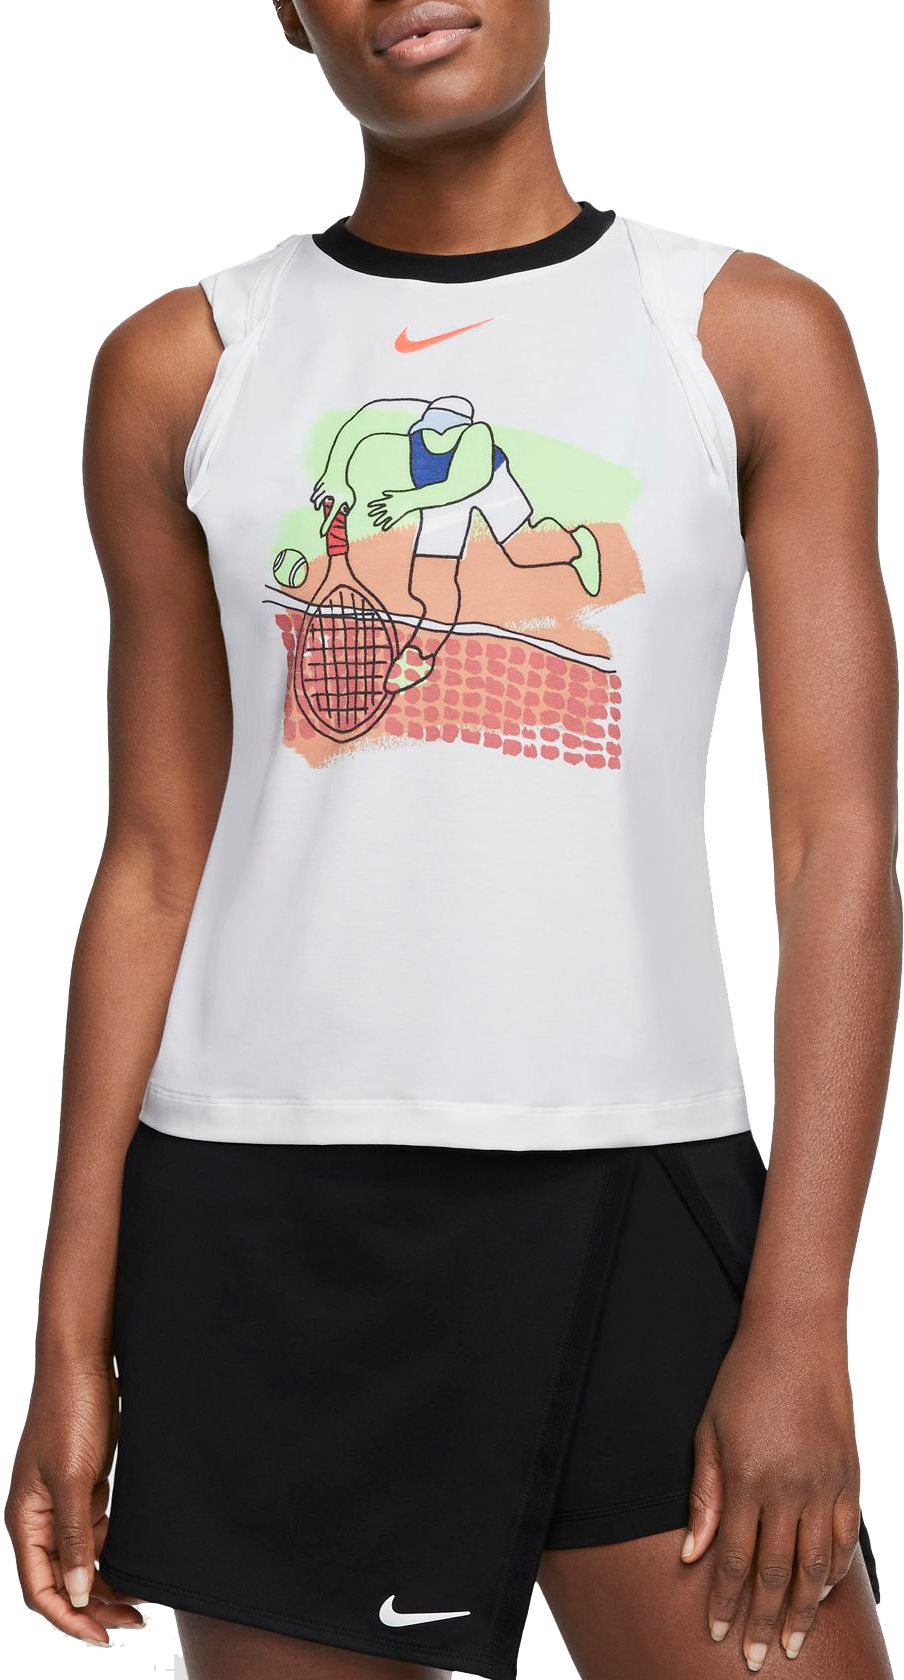 nike tennis shirt womens